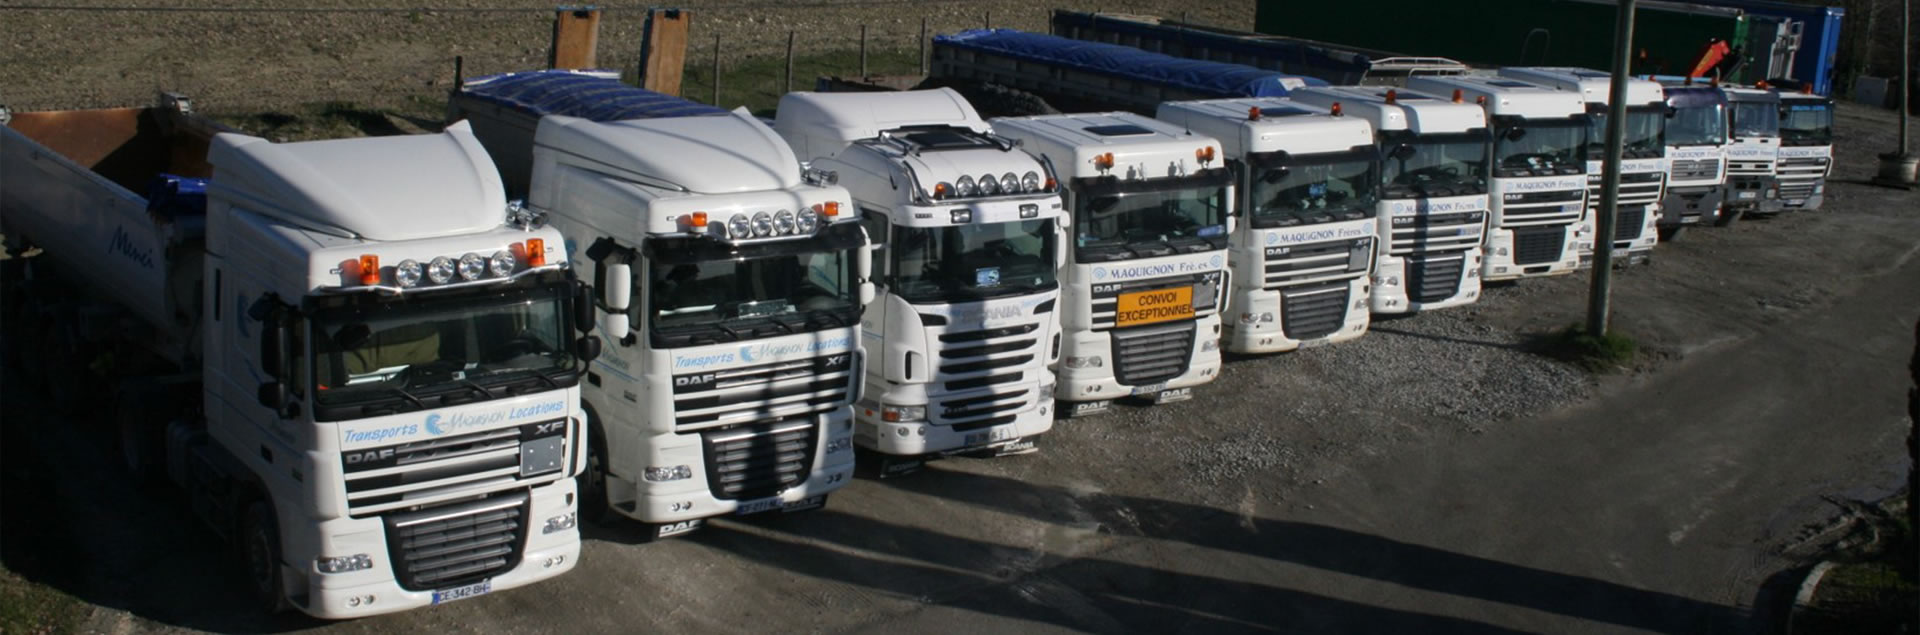 Maquignon - Flotte de camions